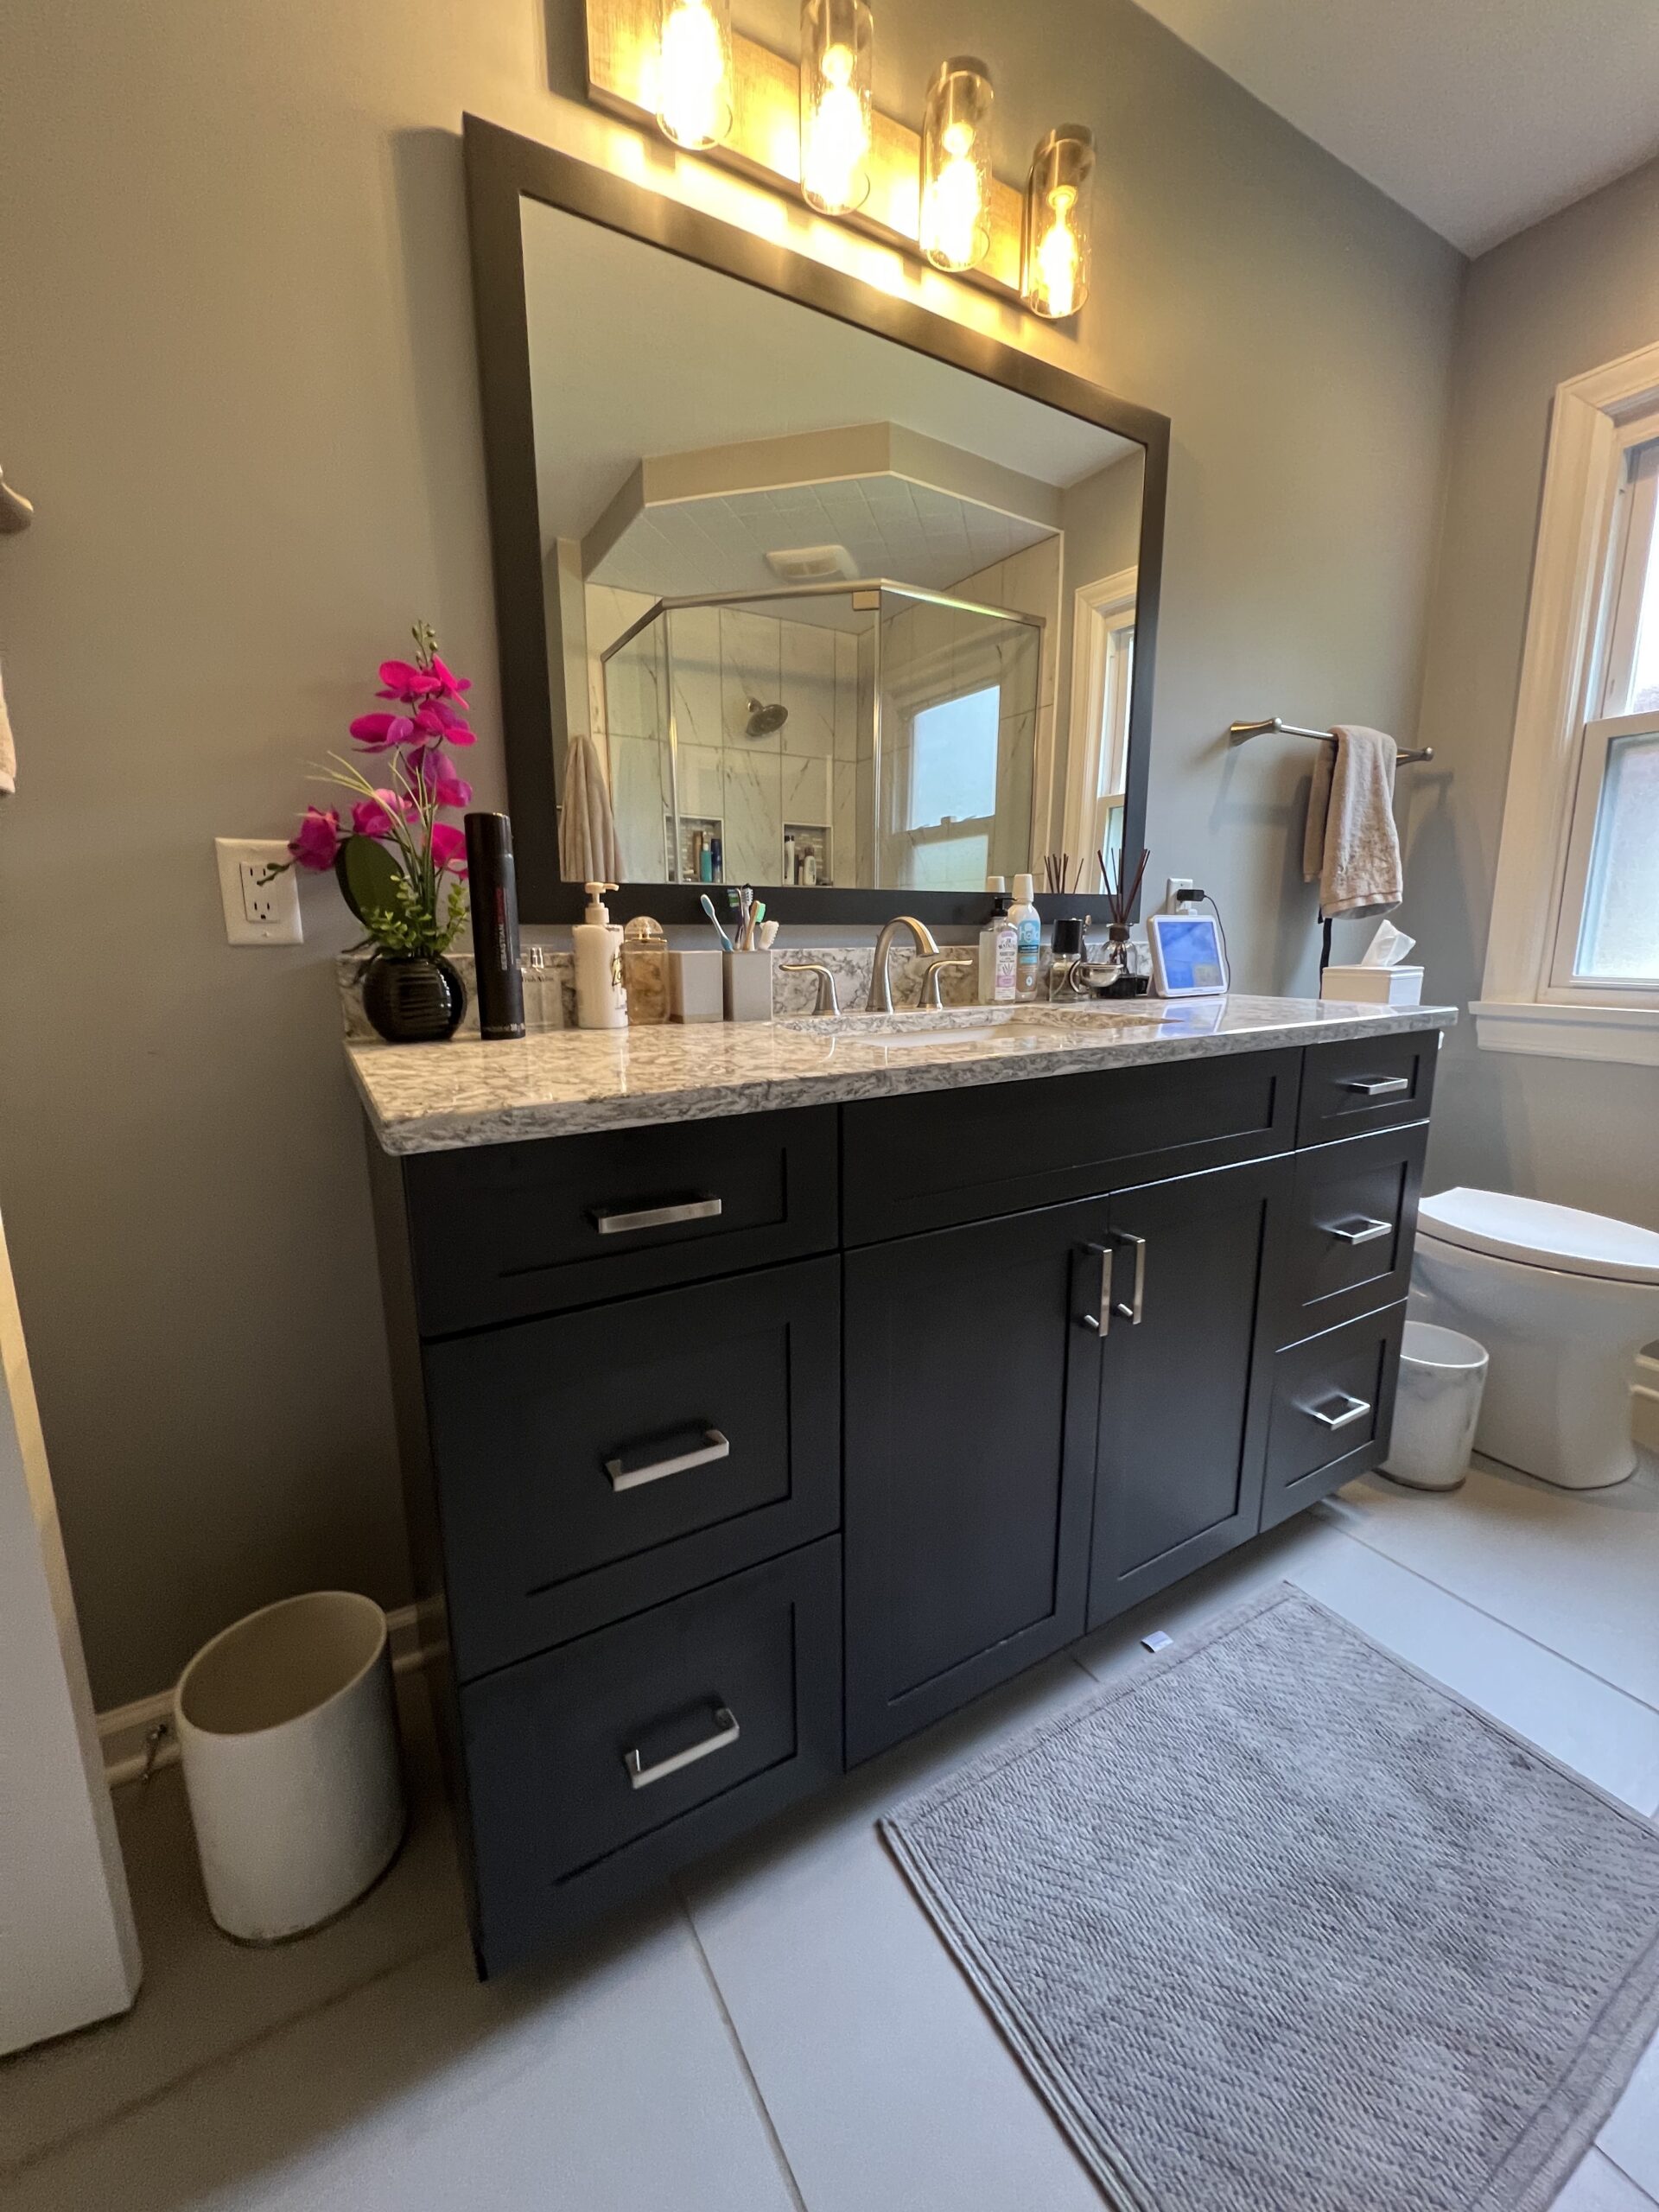 Contemporary bathroom, white marble countertop sink, black cabinet storage, one-piece toilet, blurry window